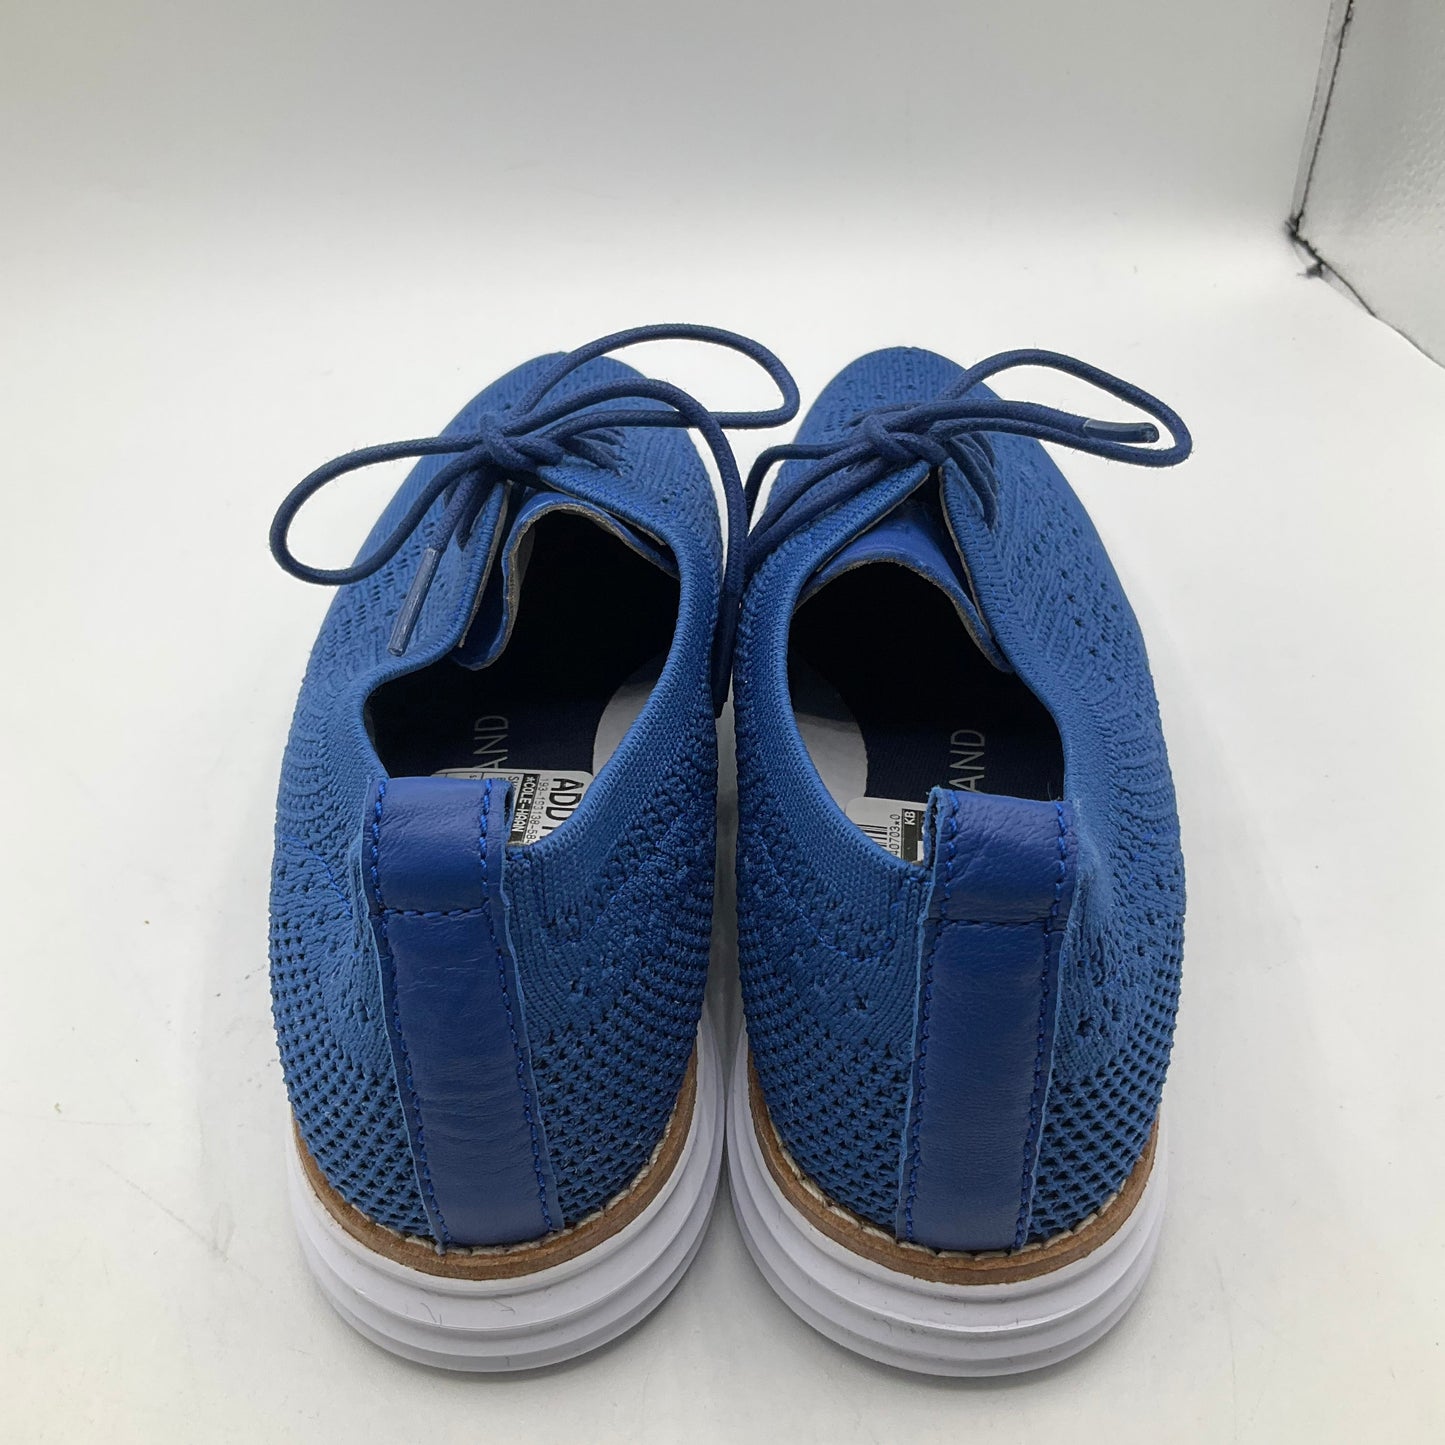 Blue Shoes Flats Cole-haan, Size 7.5